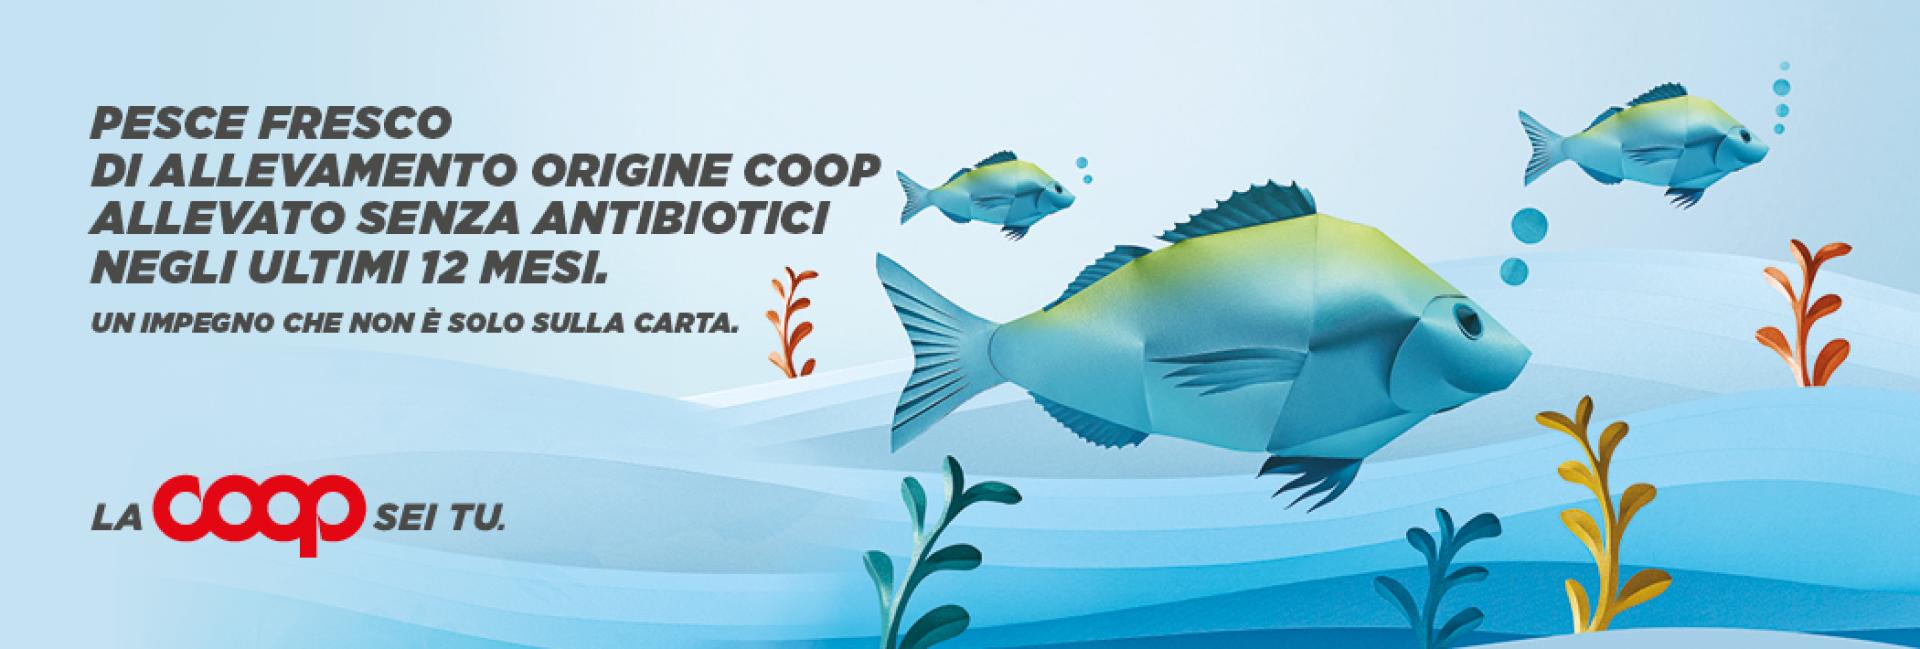 Pesce Coop allevato senza antibiotici negli ultimi 12 mesi